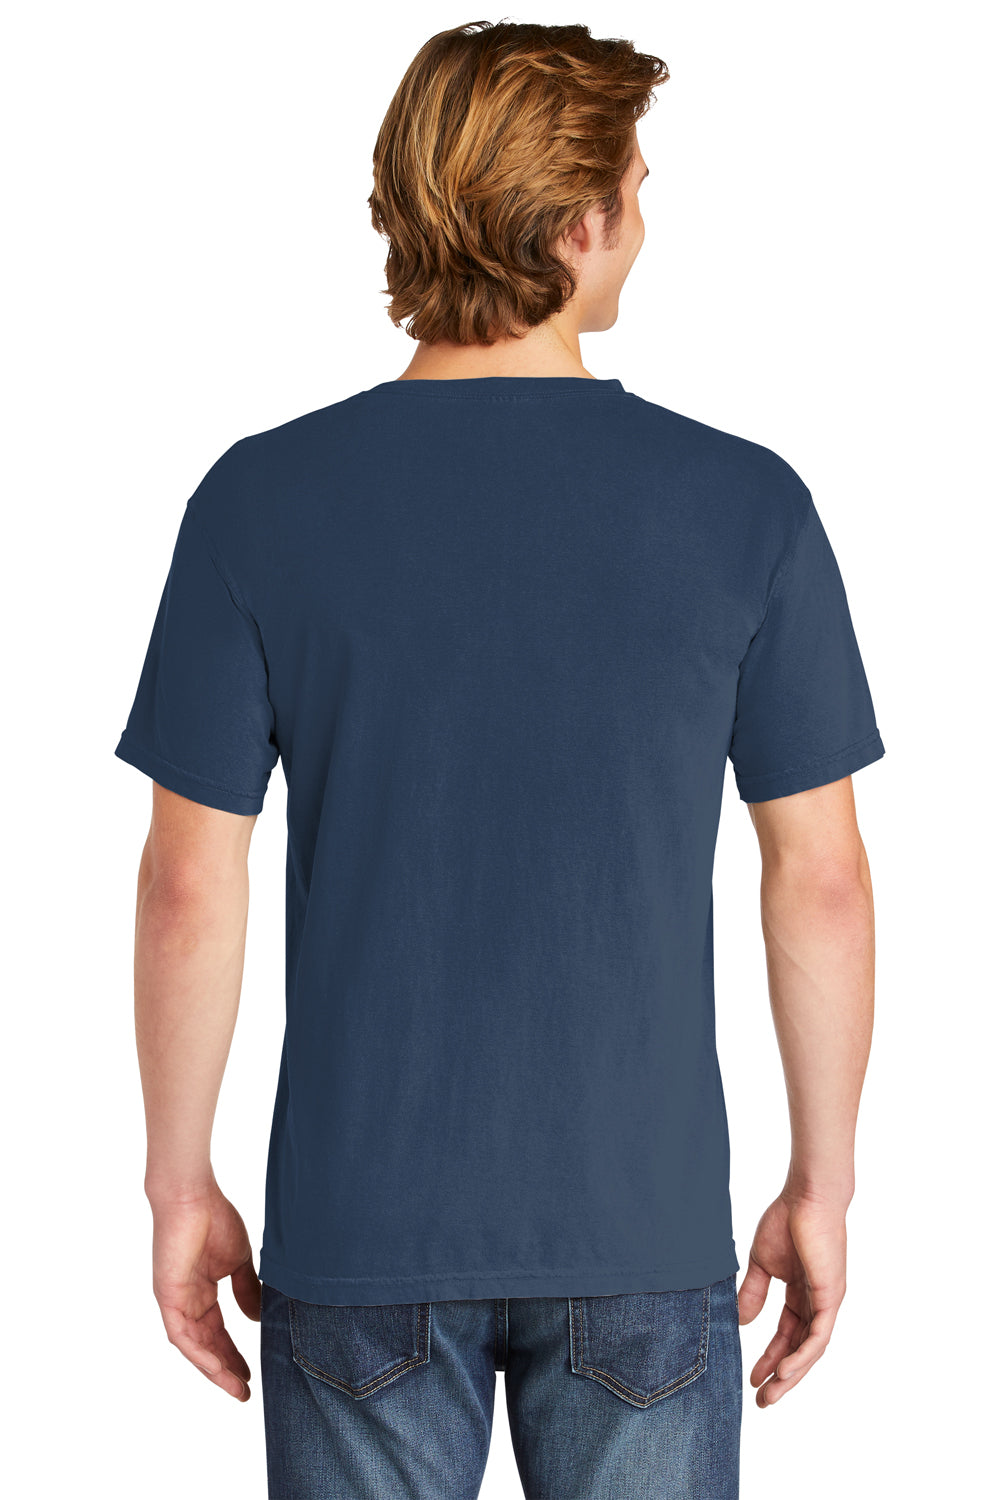 Comfort Colors Mens Short Sleeve Crewneck T-Shirt China Blue Back